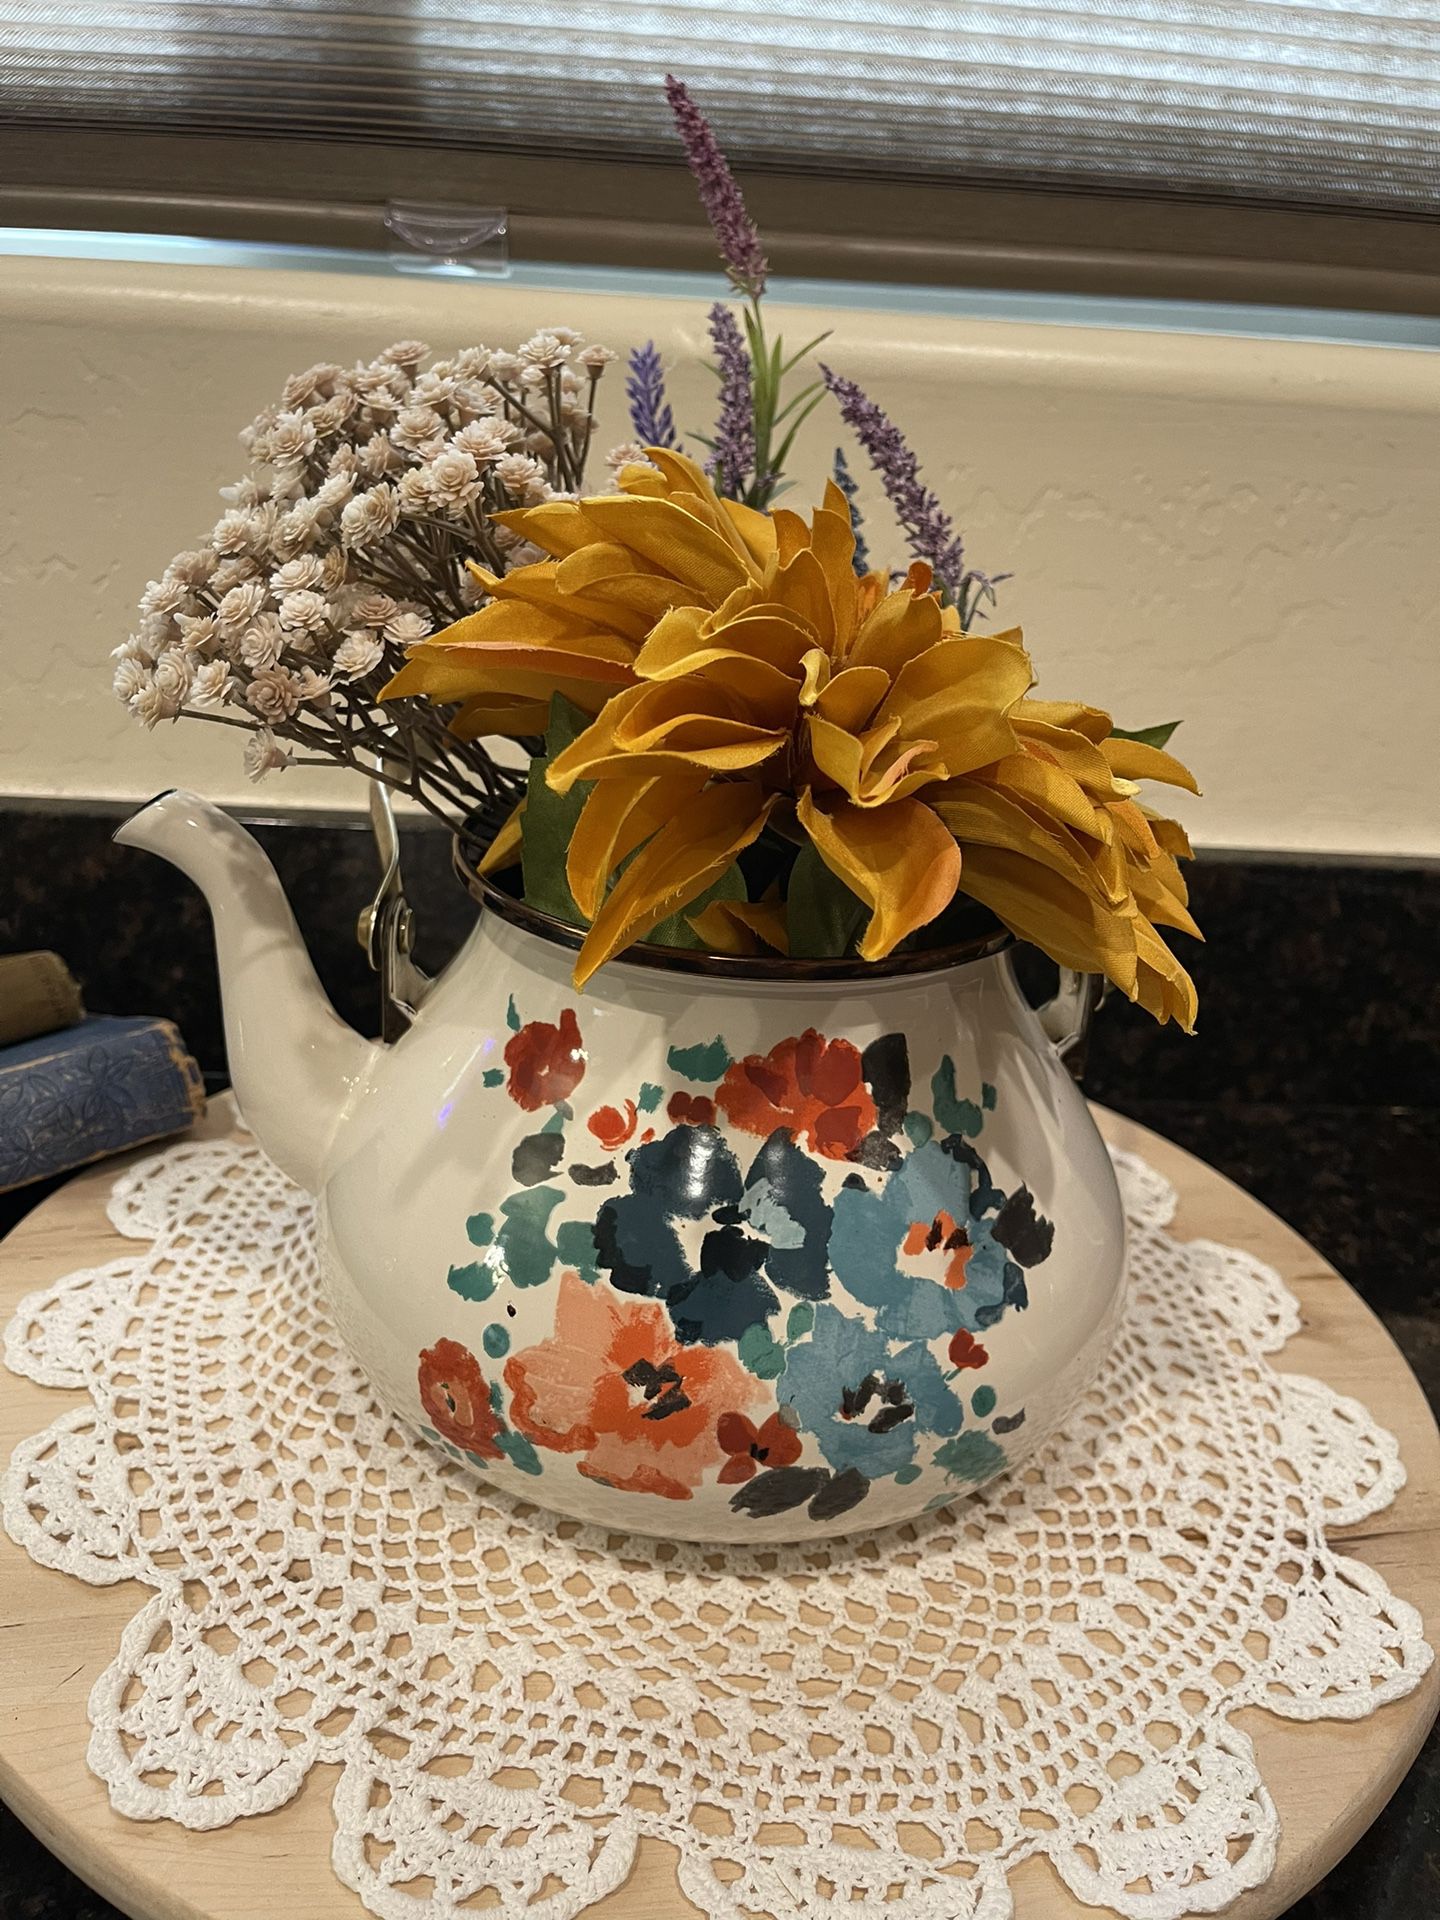 Vintage painted tea kettle with flowers